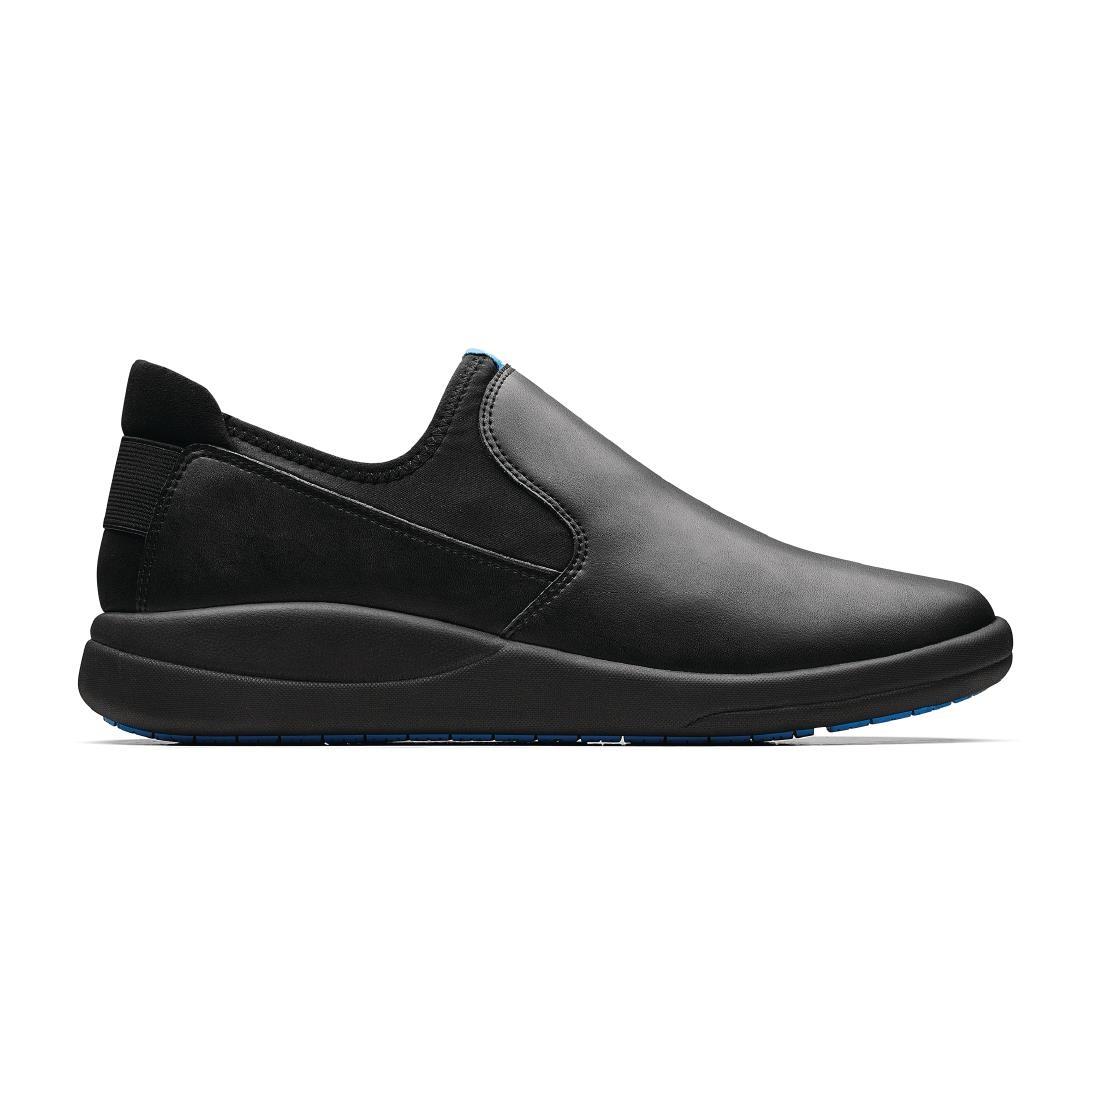 WearerTech Vitalise Slip on Shoe Black/Black with Modular Insole Size 37